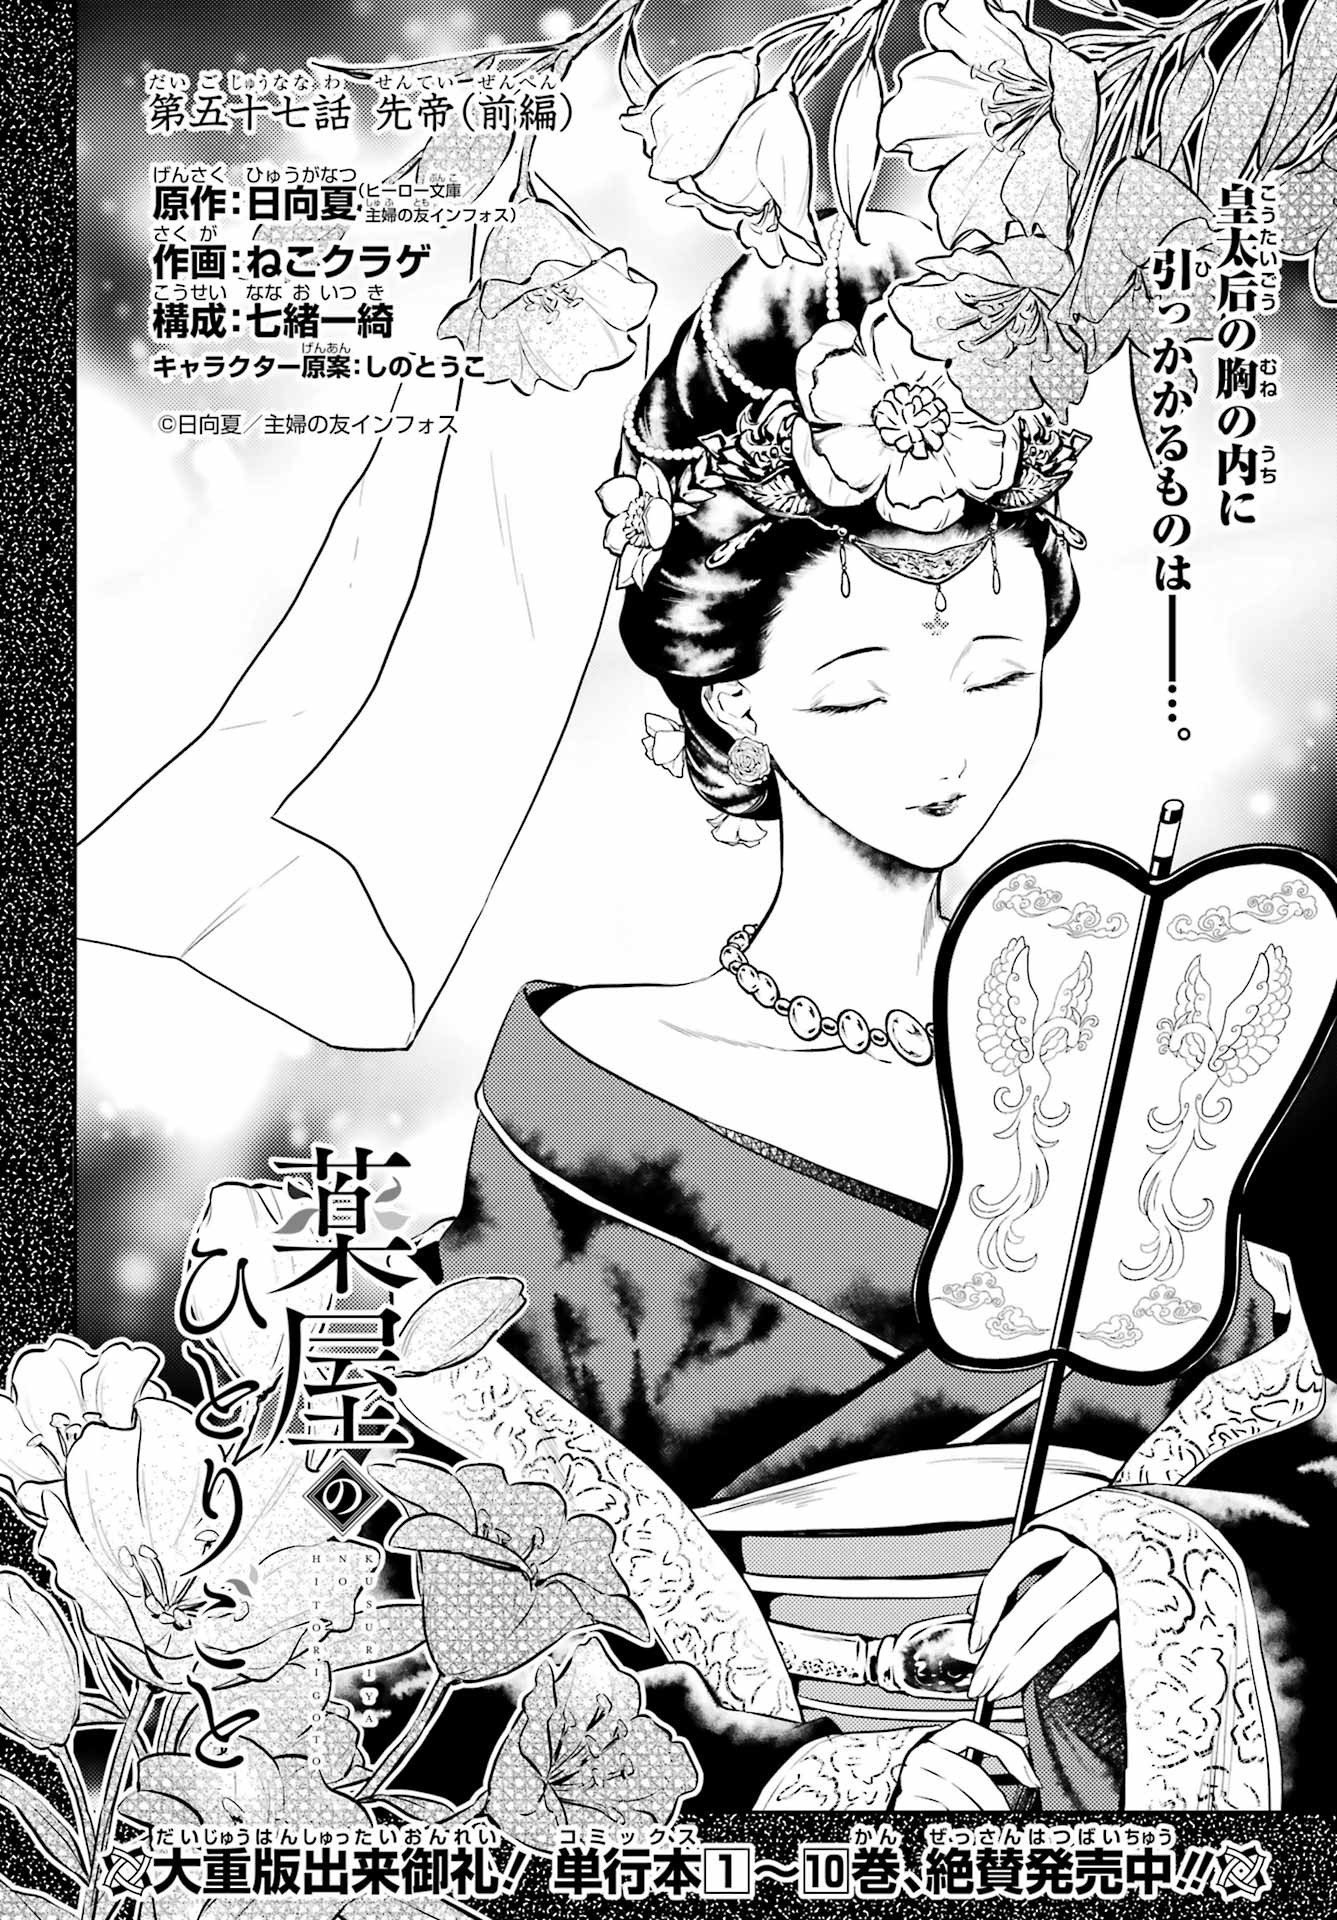 Kusuriya no Hitorigoto - Chapter 57 - Page 2